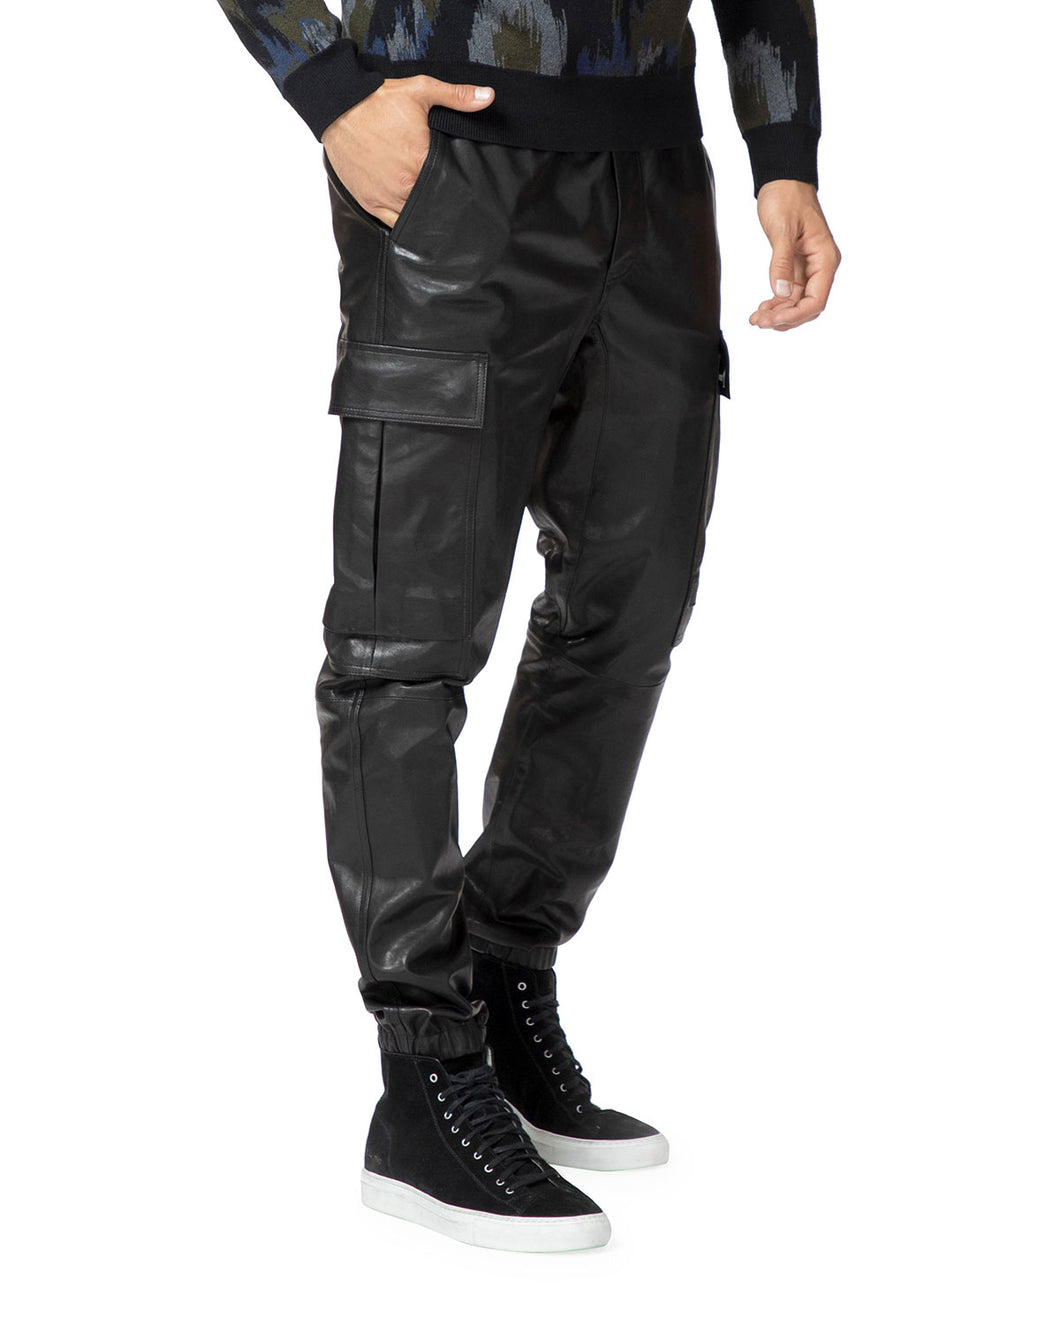 Men's Genuine Leather Cargo Jogging pants